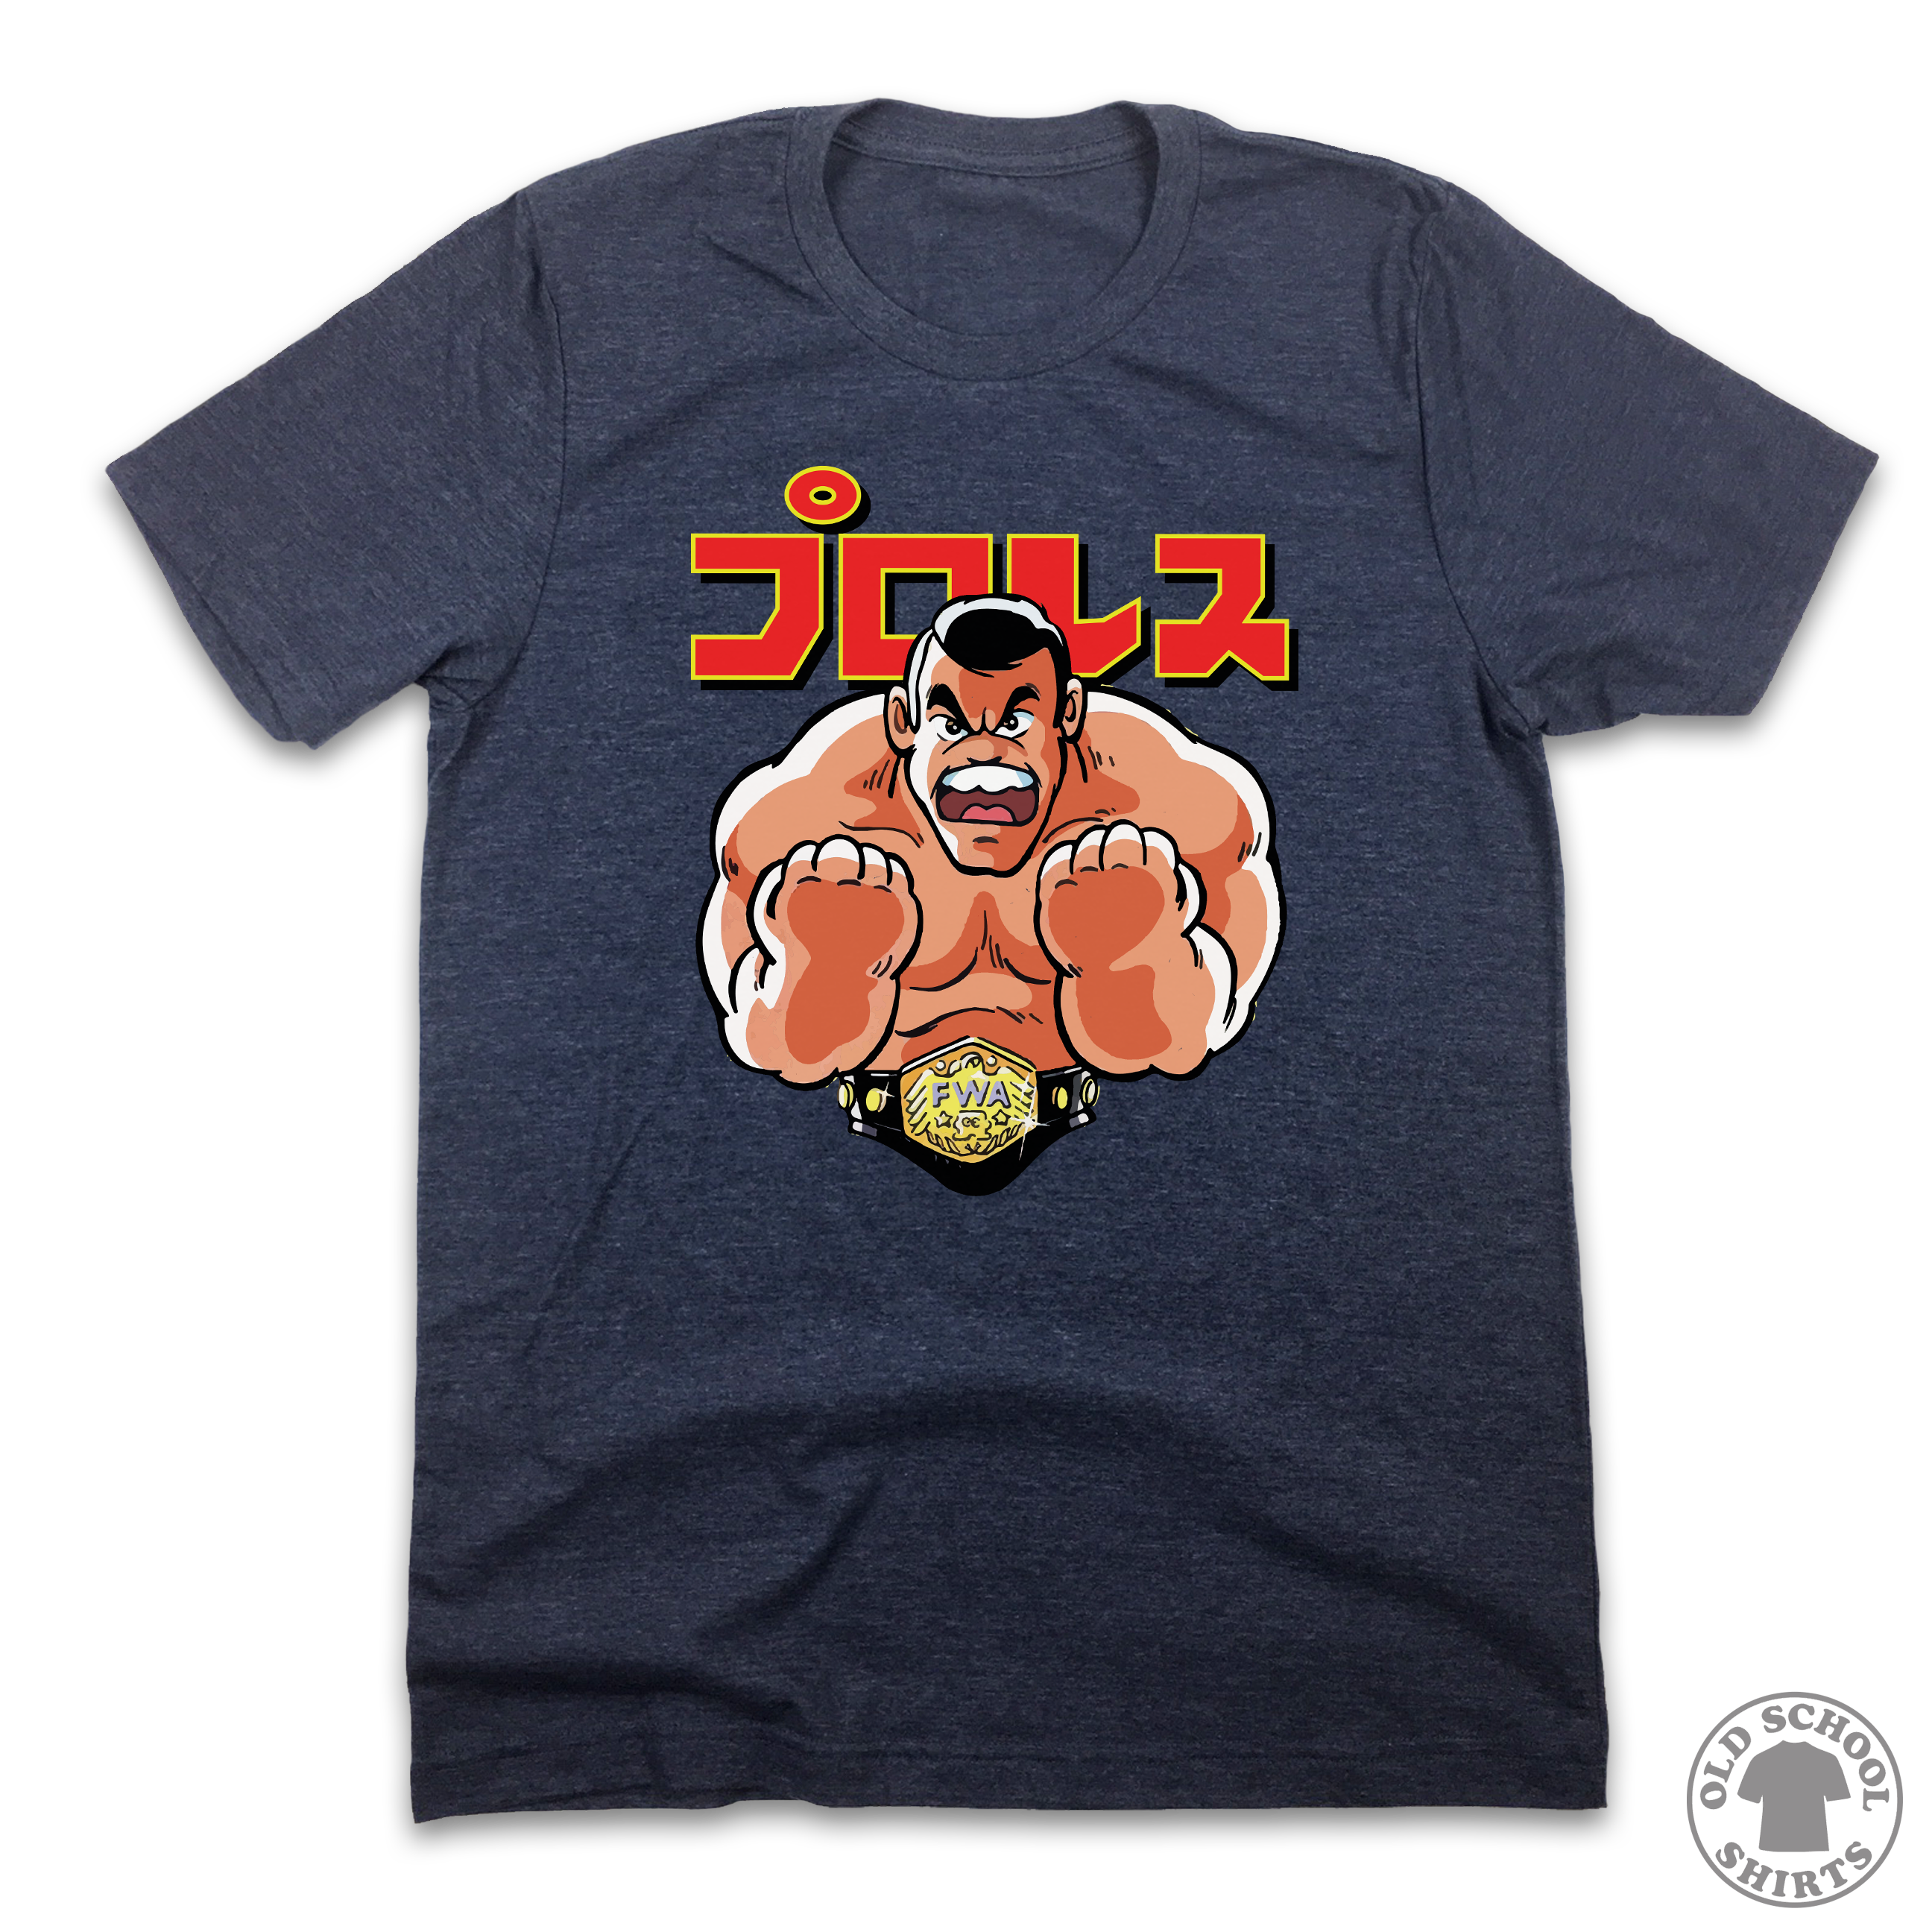 NES Pro Wrestler - Old School Shirts- Retro Sports T Shirts